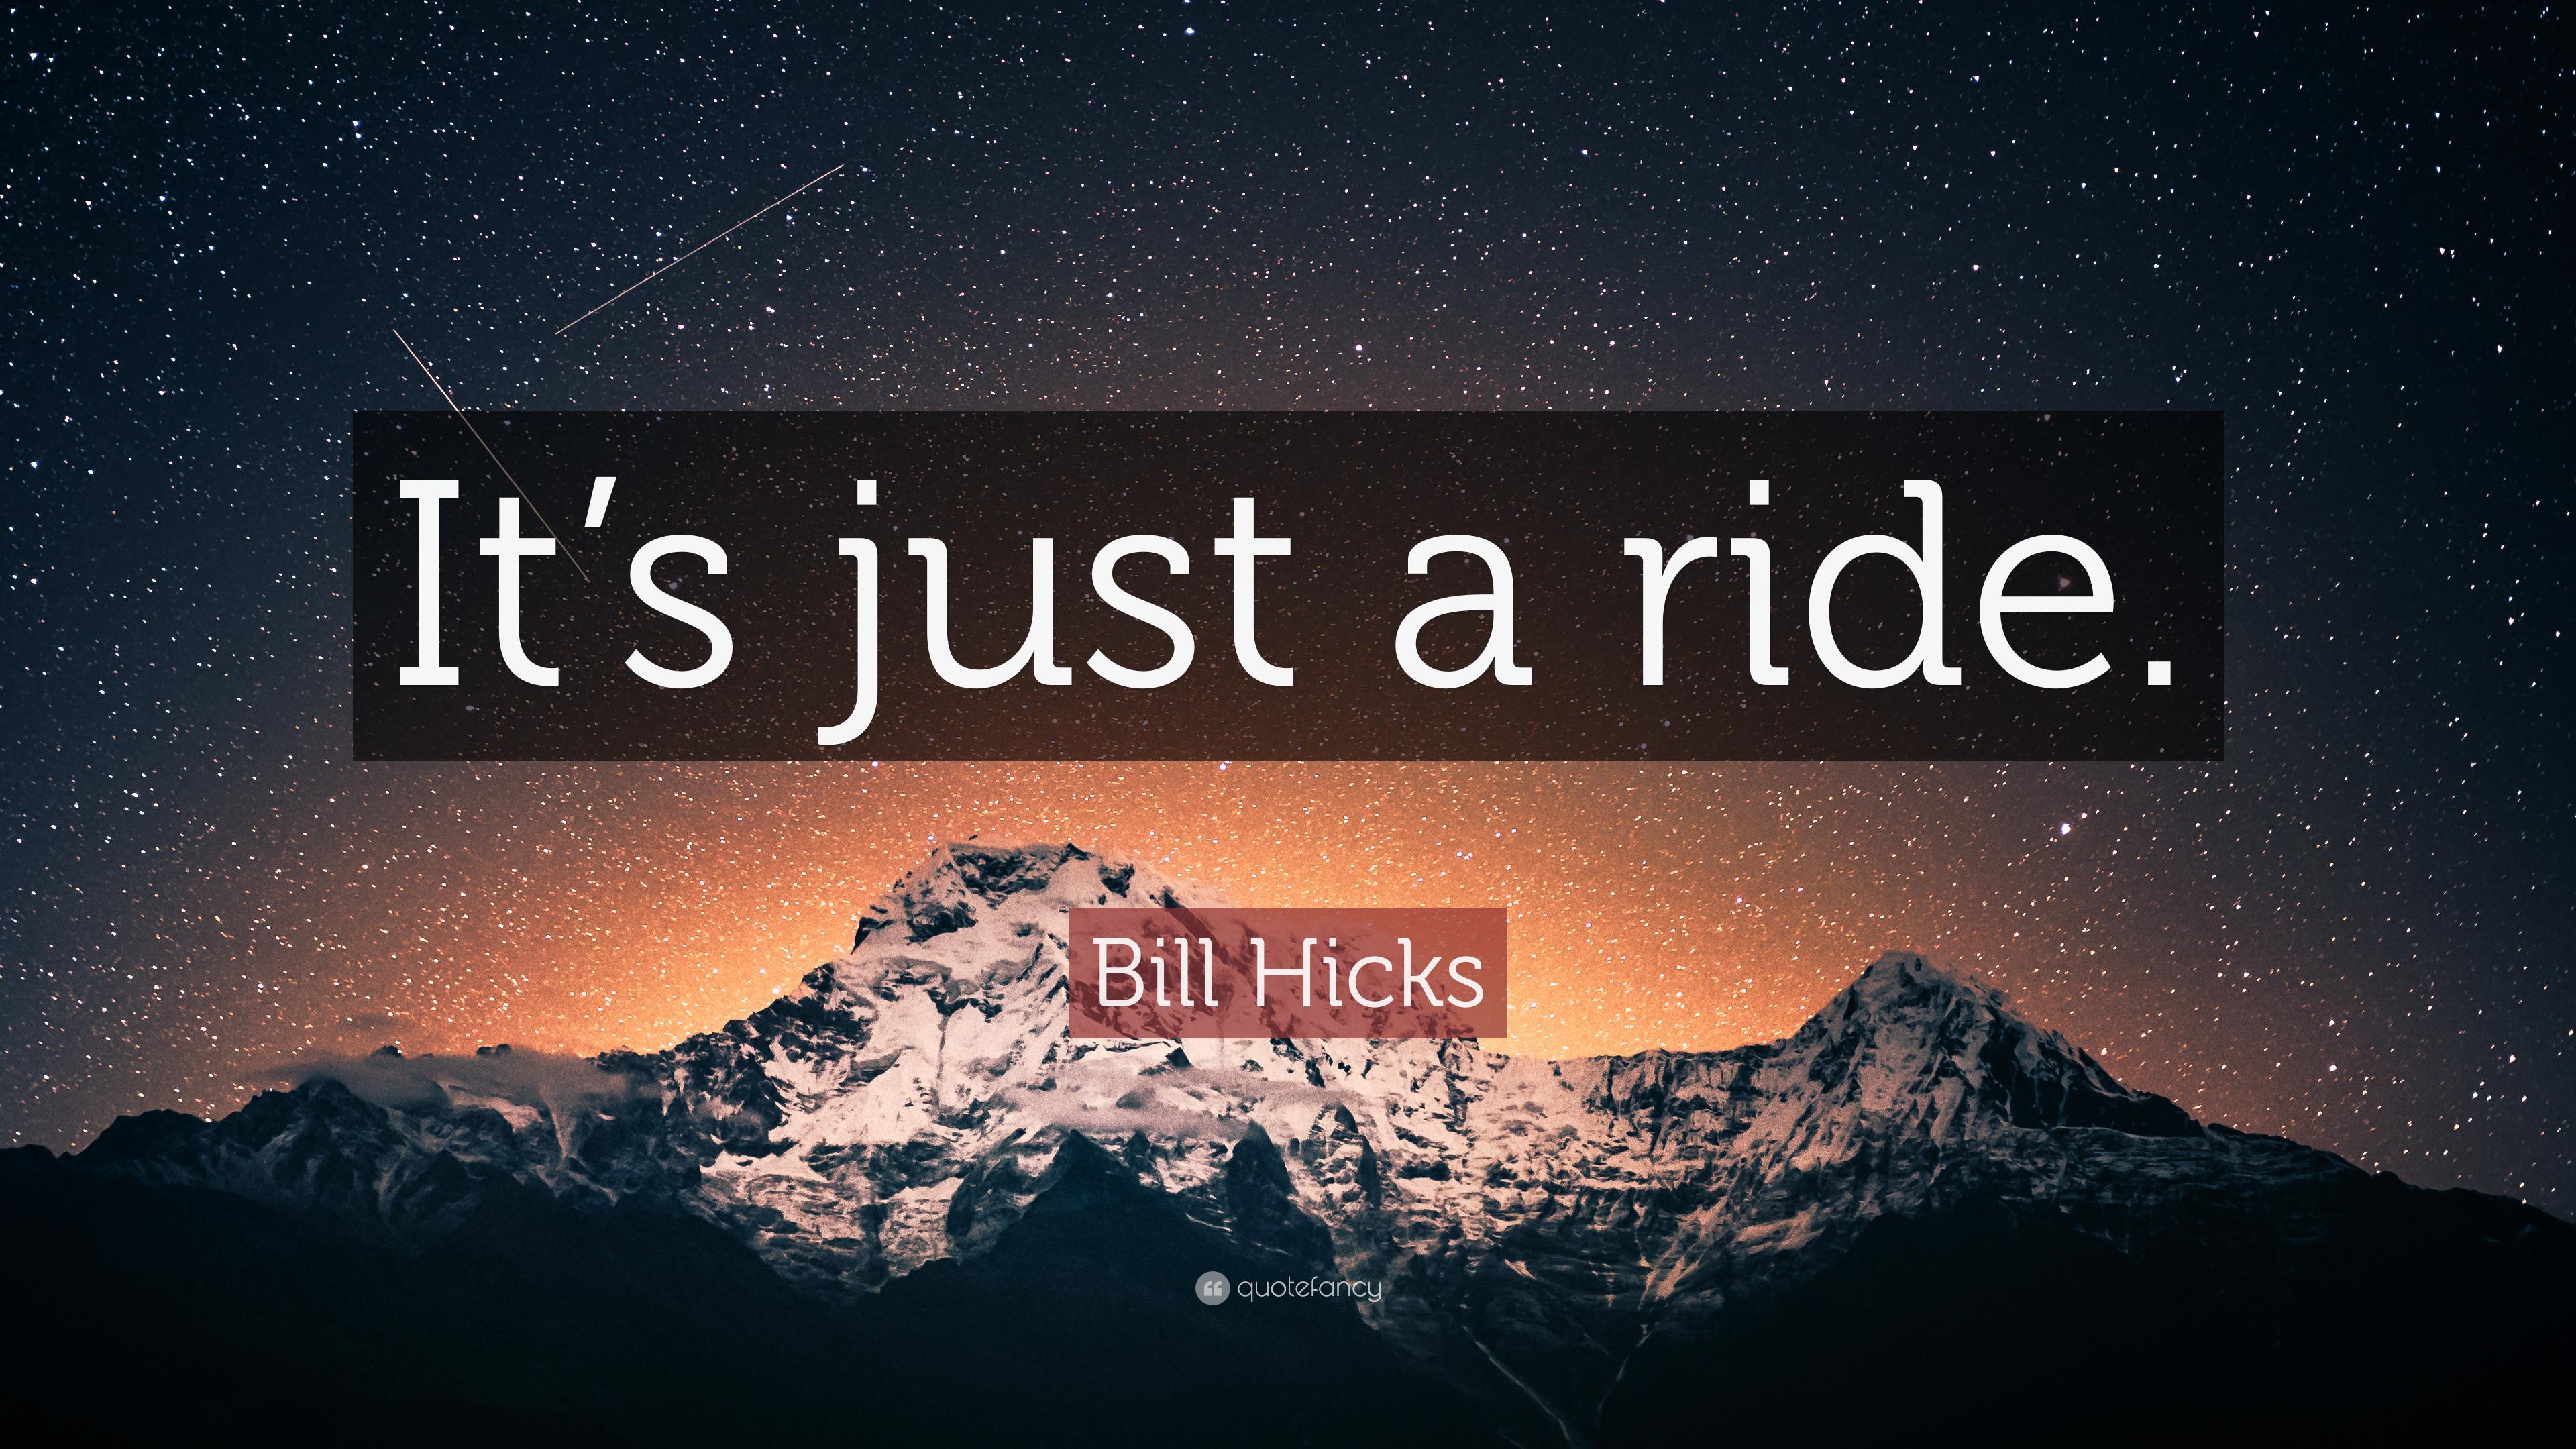 Bill Hicks Quote: “It's just a ride.” (12 wallpaper)